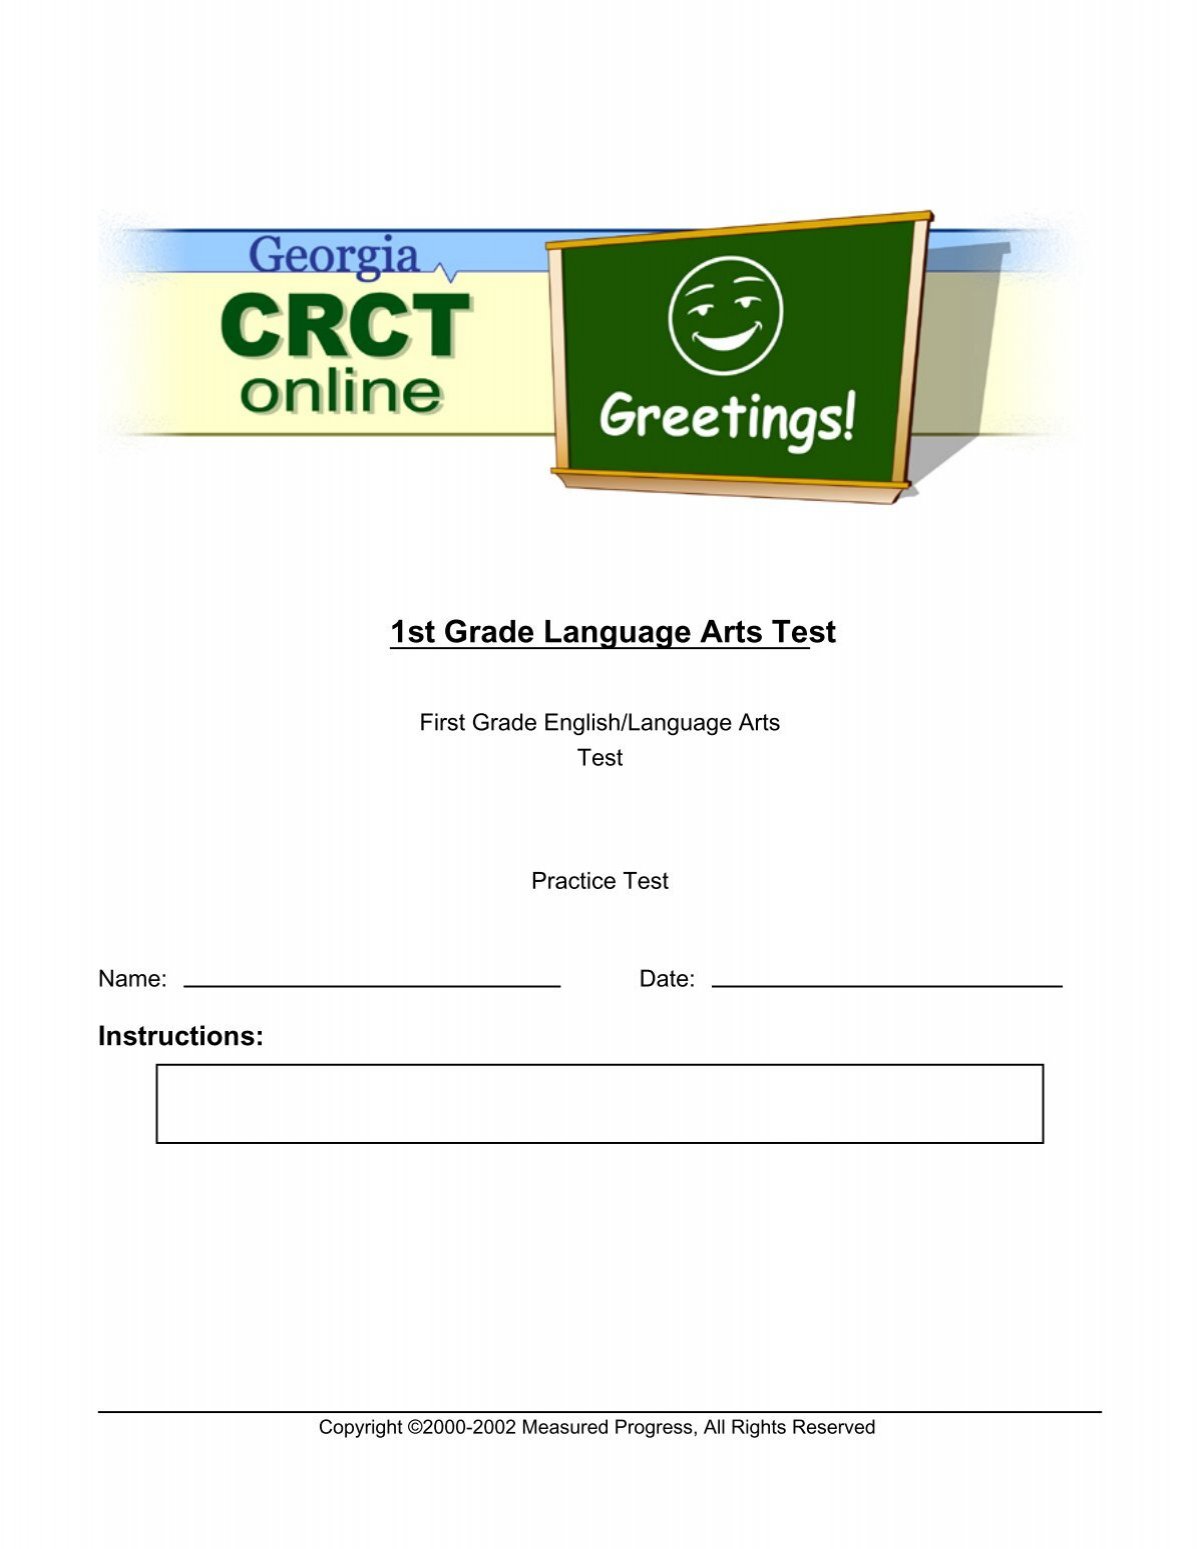 1st-grade-language-arts-test